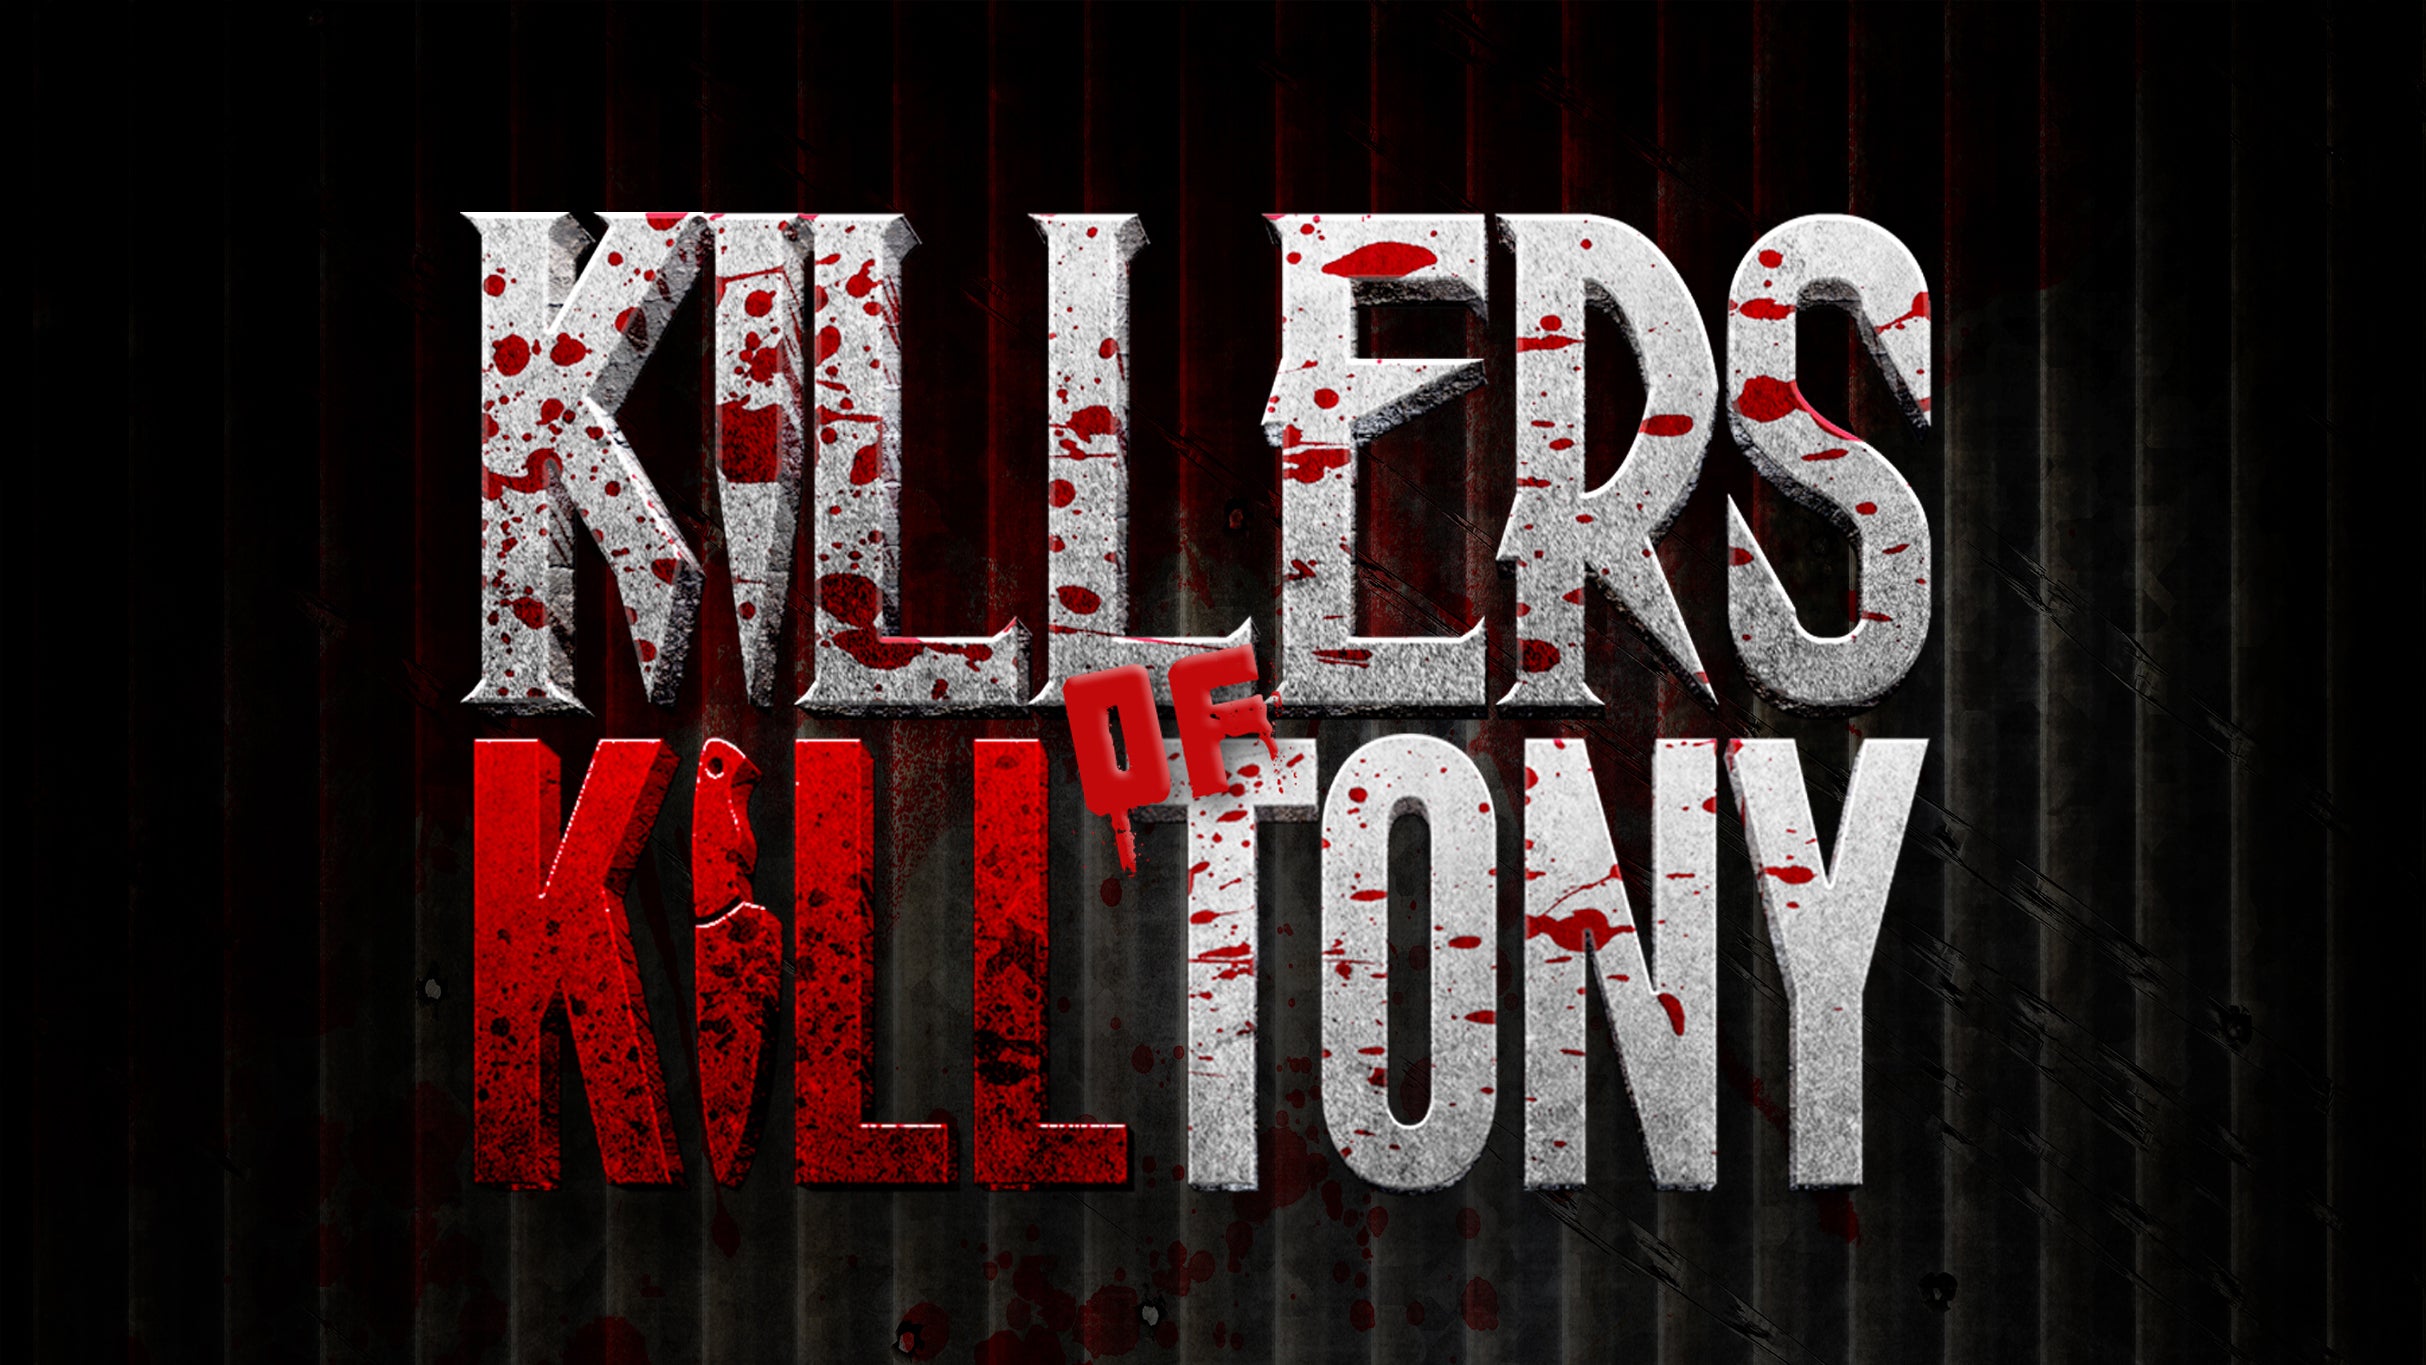 Killers of Kill Tony in Reading promo photo for Artist presale offer code